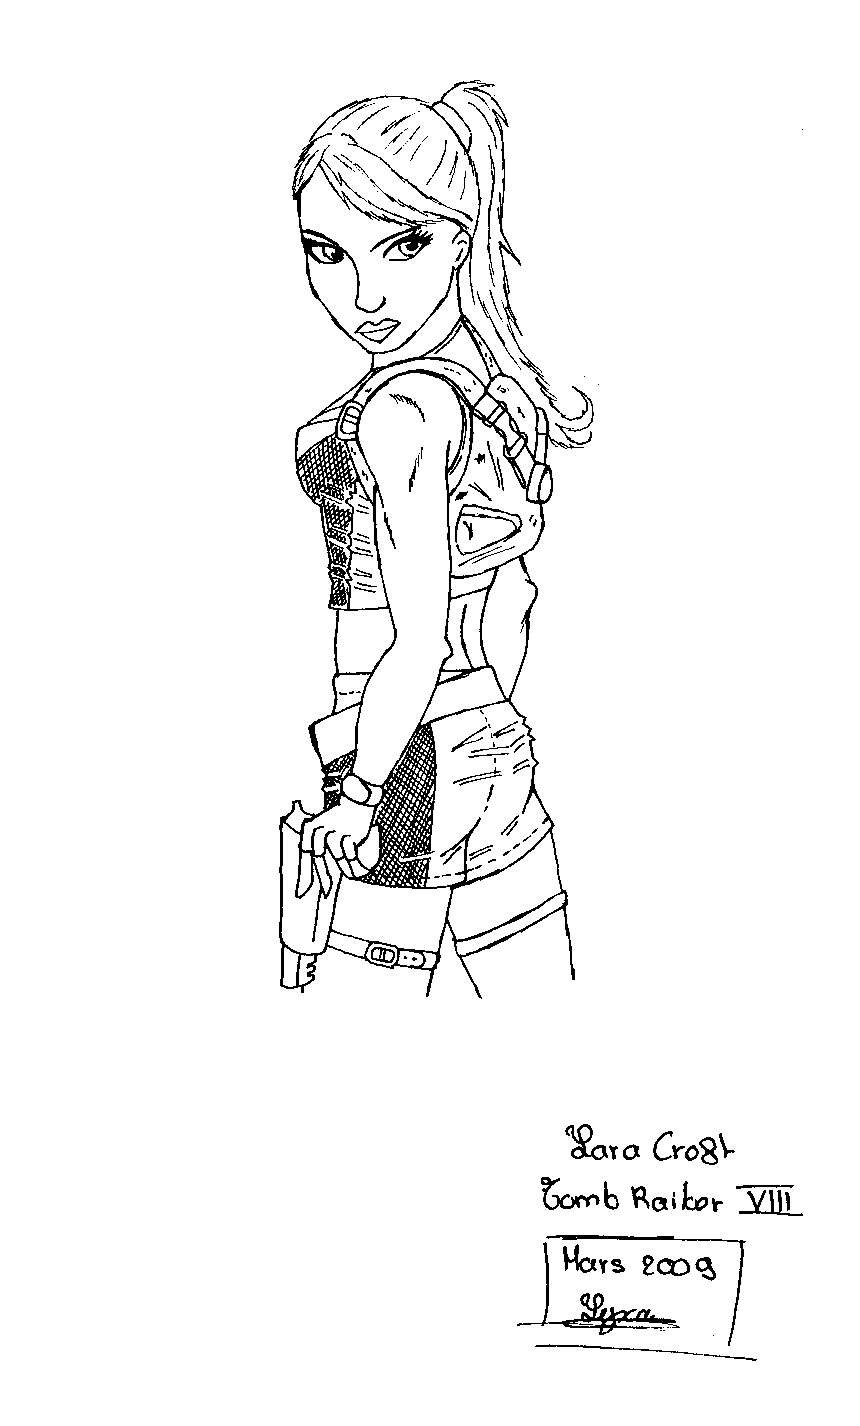 Lara croft pose
